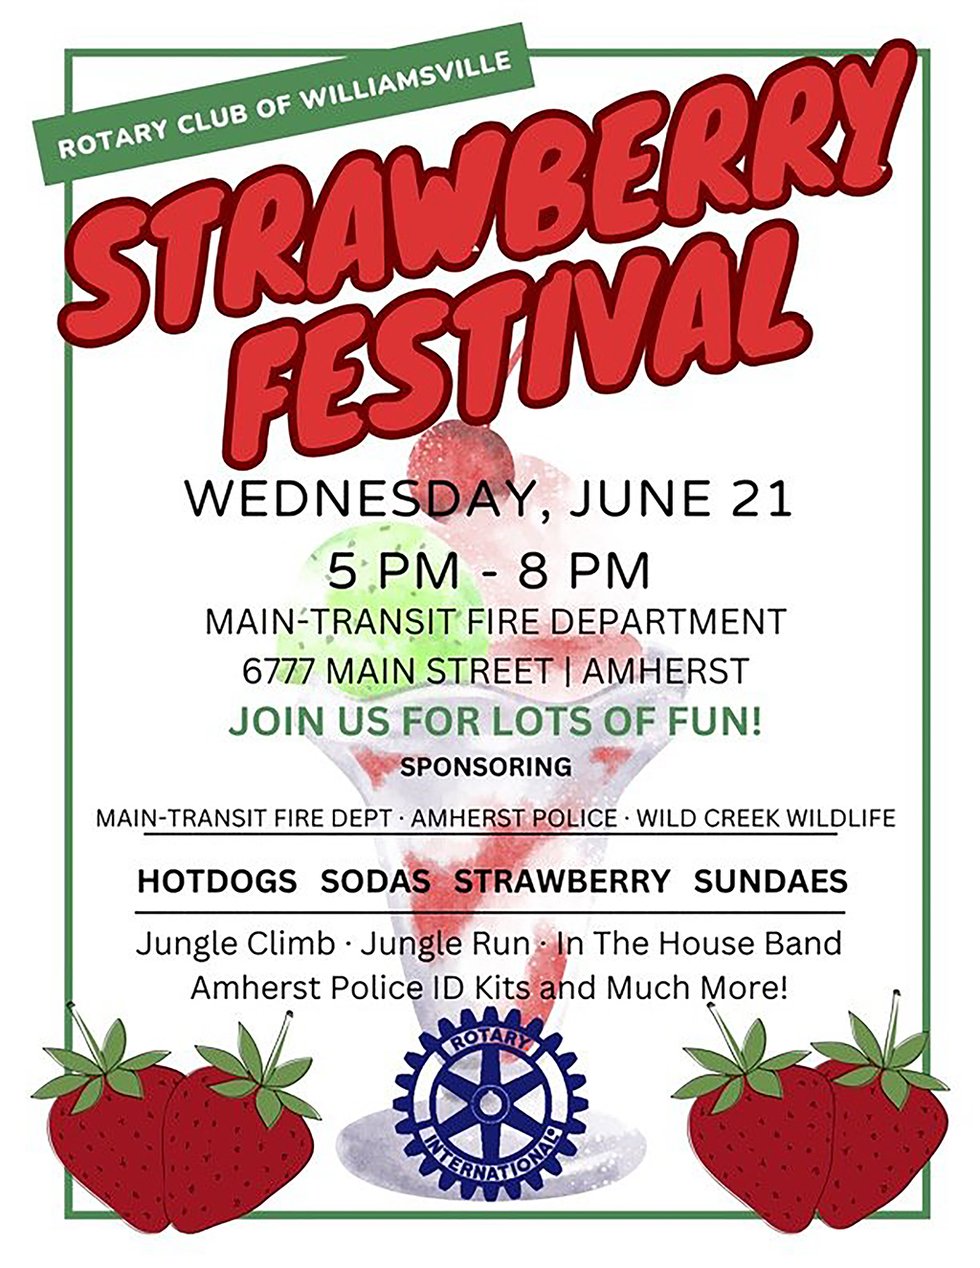 Strawberry Festival Rotary.jpg